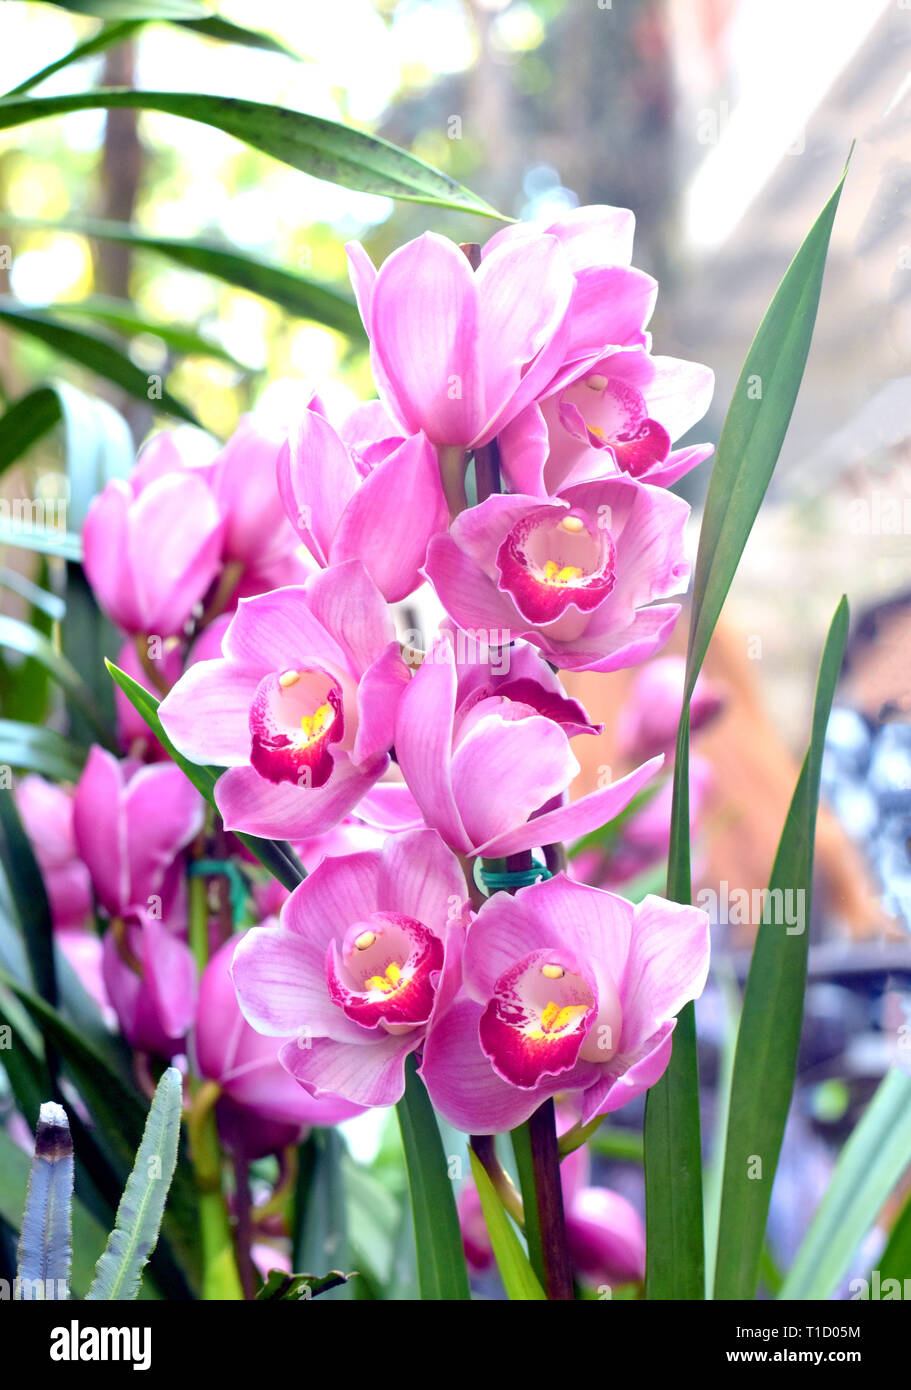 Rosa cymbidium Orchideenblüte auf Spike, schöne blumige Muster, pink orchid flower Farm, rosa Orchidee Garten, Blumengarten, blumige Muster, Stockfoto